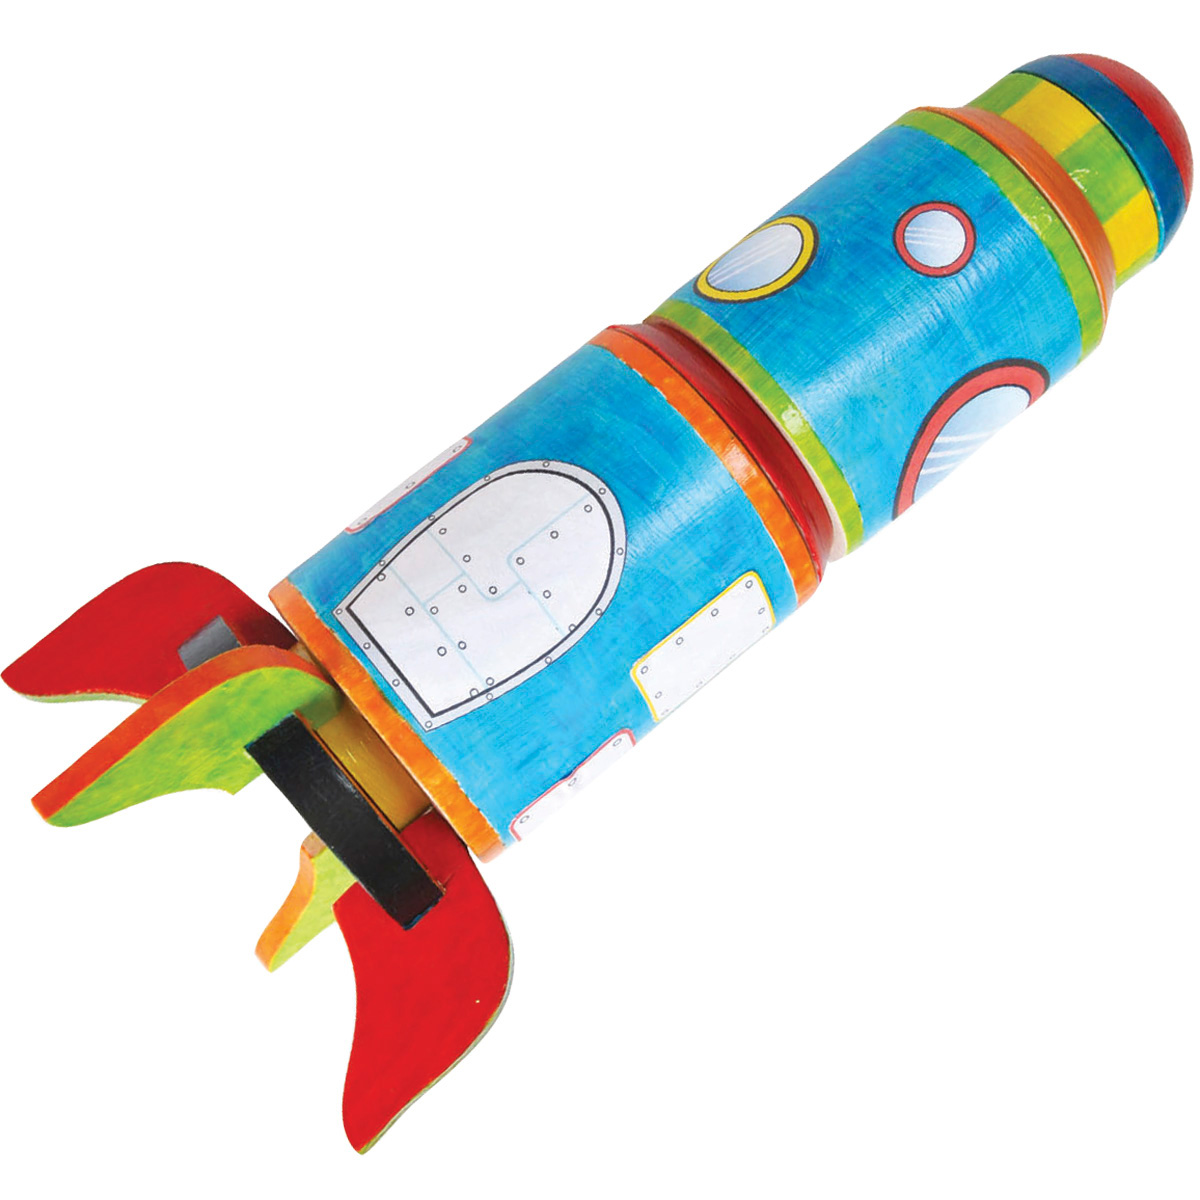 wooden space rocket